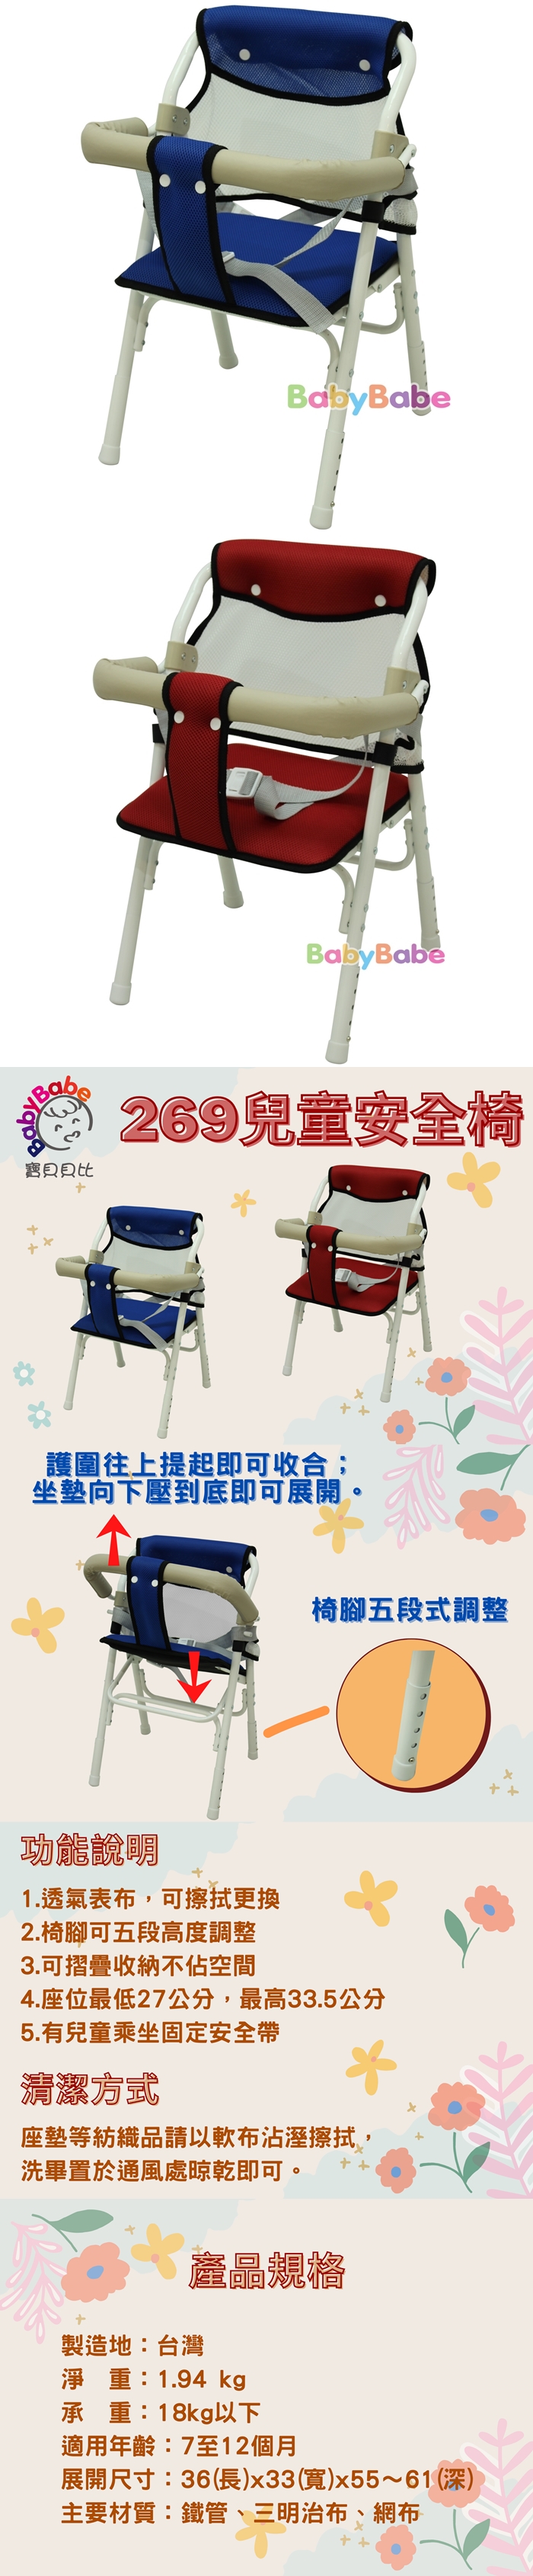 MONARCH-babybabe兒童安全椅(藍色/紅色)269